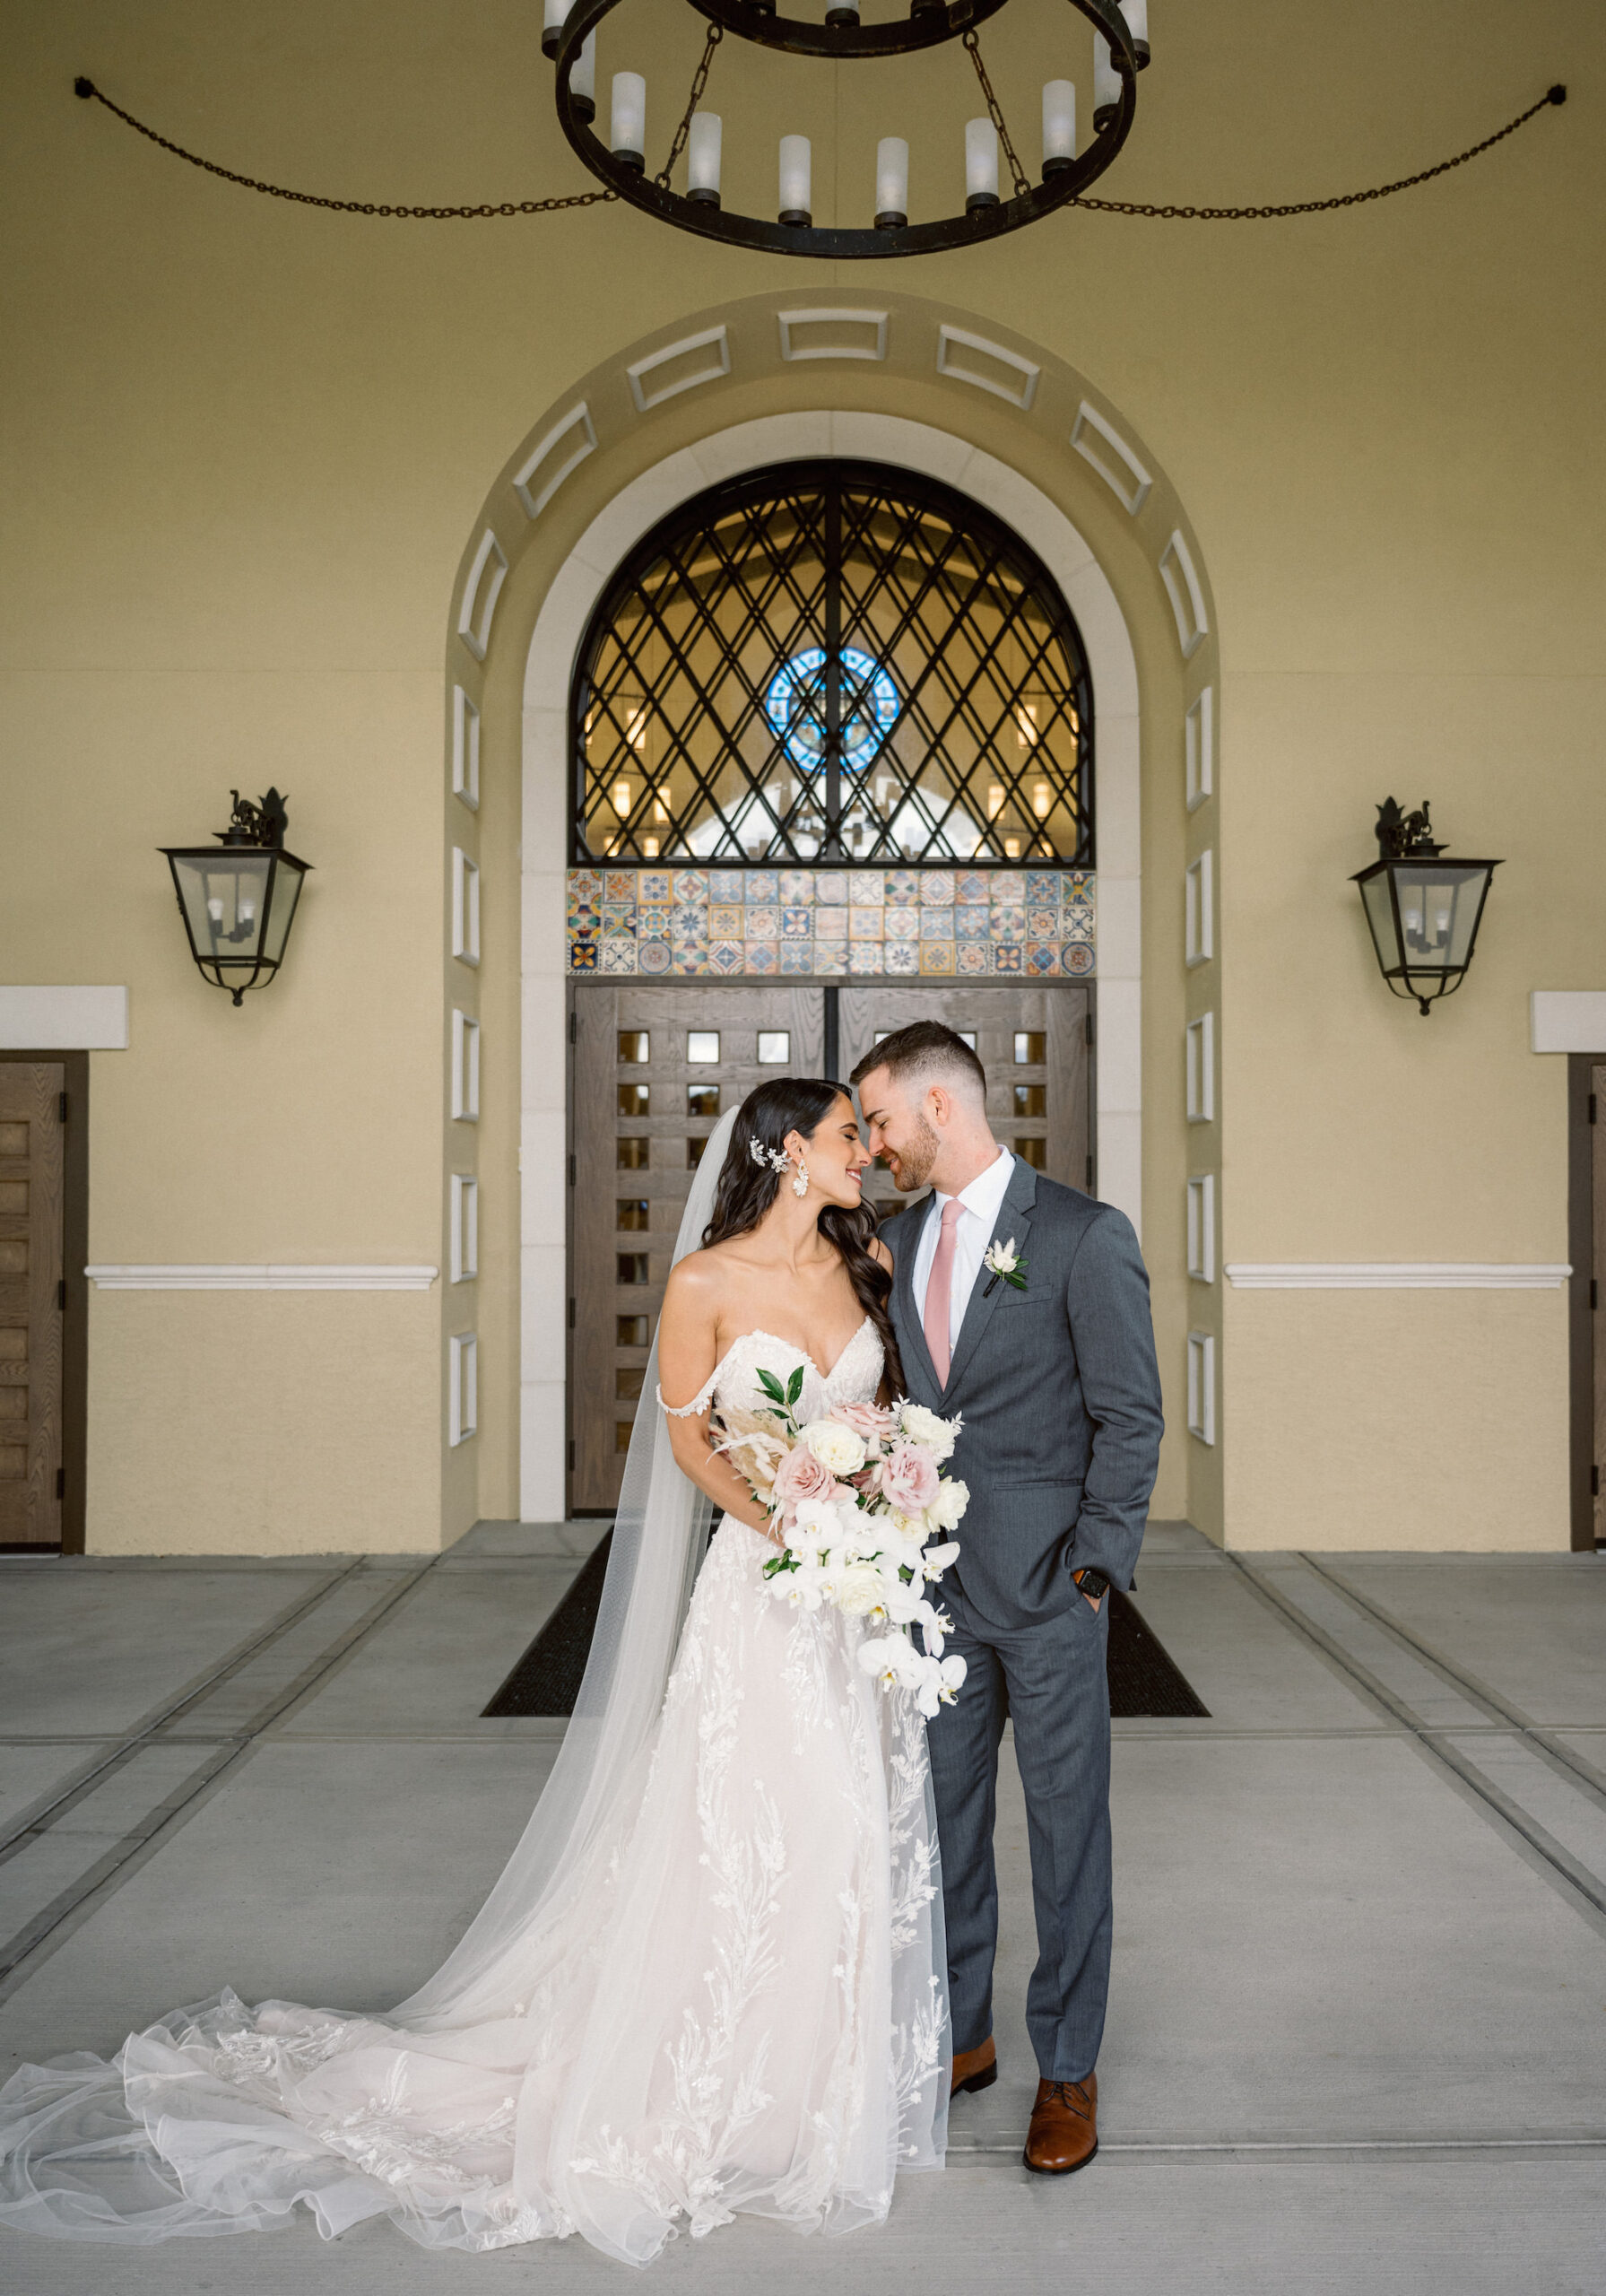 Bride and Groom Wedding Portrait | Tampa Photographer Dewitt for Love